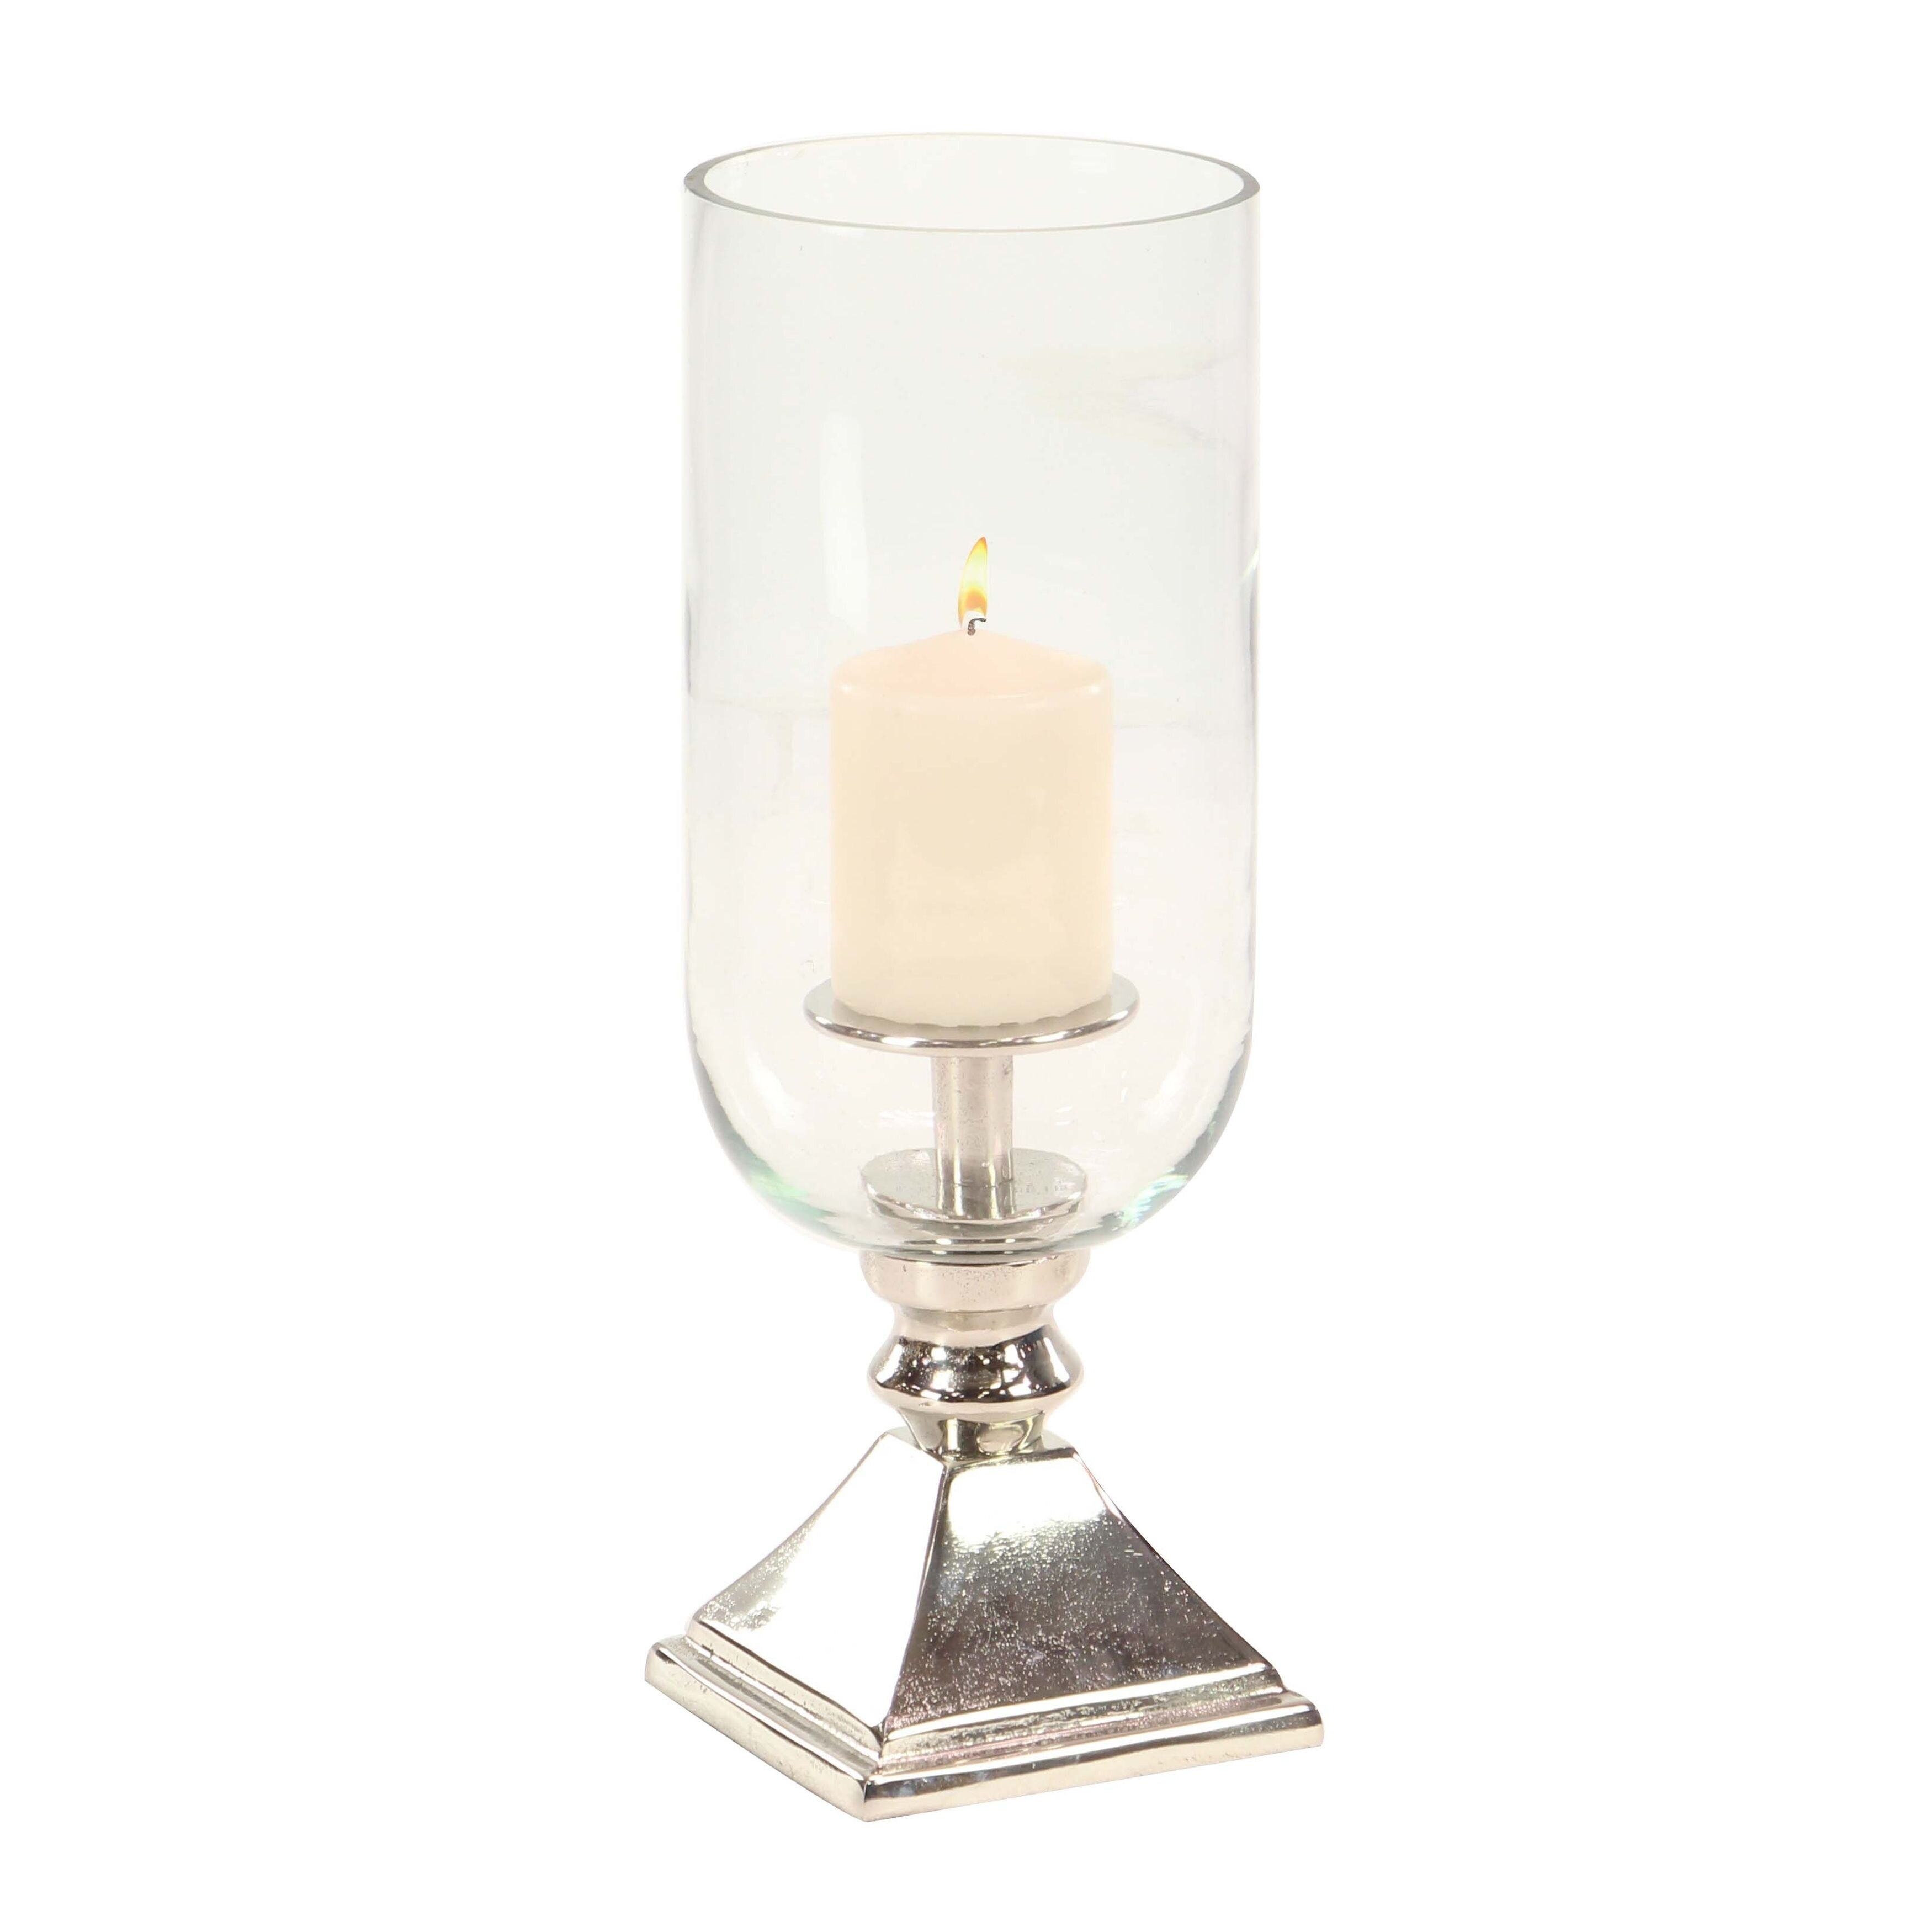 DEER HURRICANE GLASS Pillar Candle Holder RAZ 3716414 CHRISTMAS SILVER GOLD NeW! 